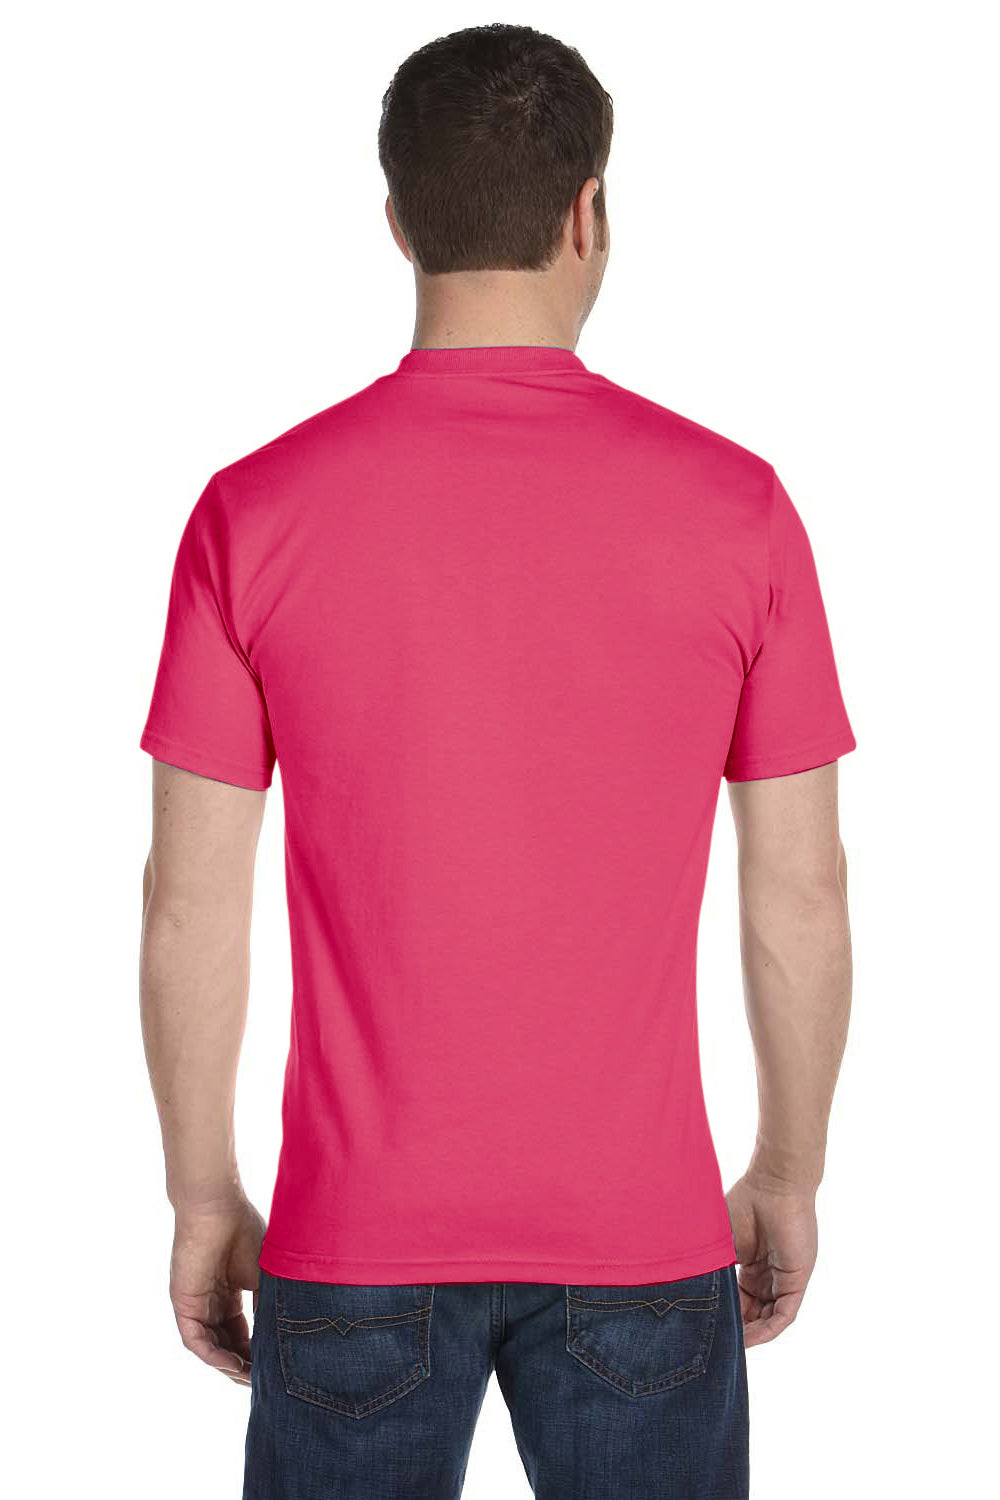 Gildan G800 Mens DryBlend Moisture Wicking Short Sleeve Crewneck T-Shirt Heliconia Pink Back